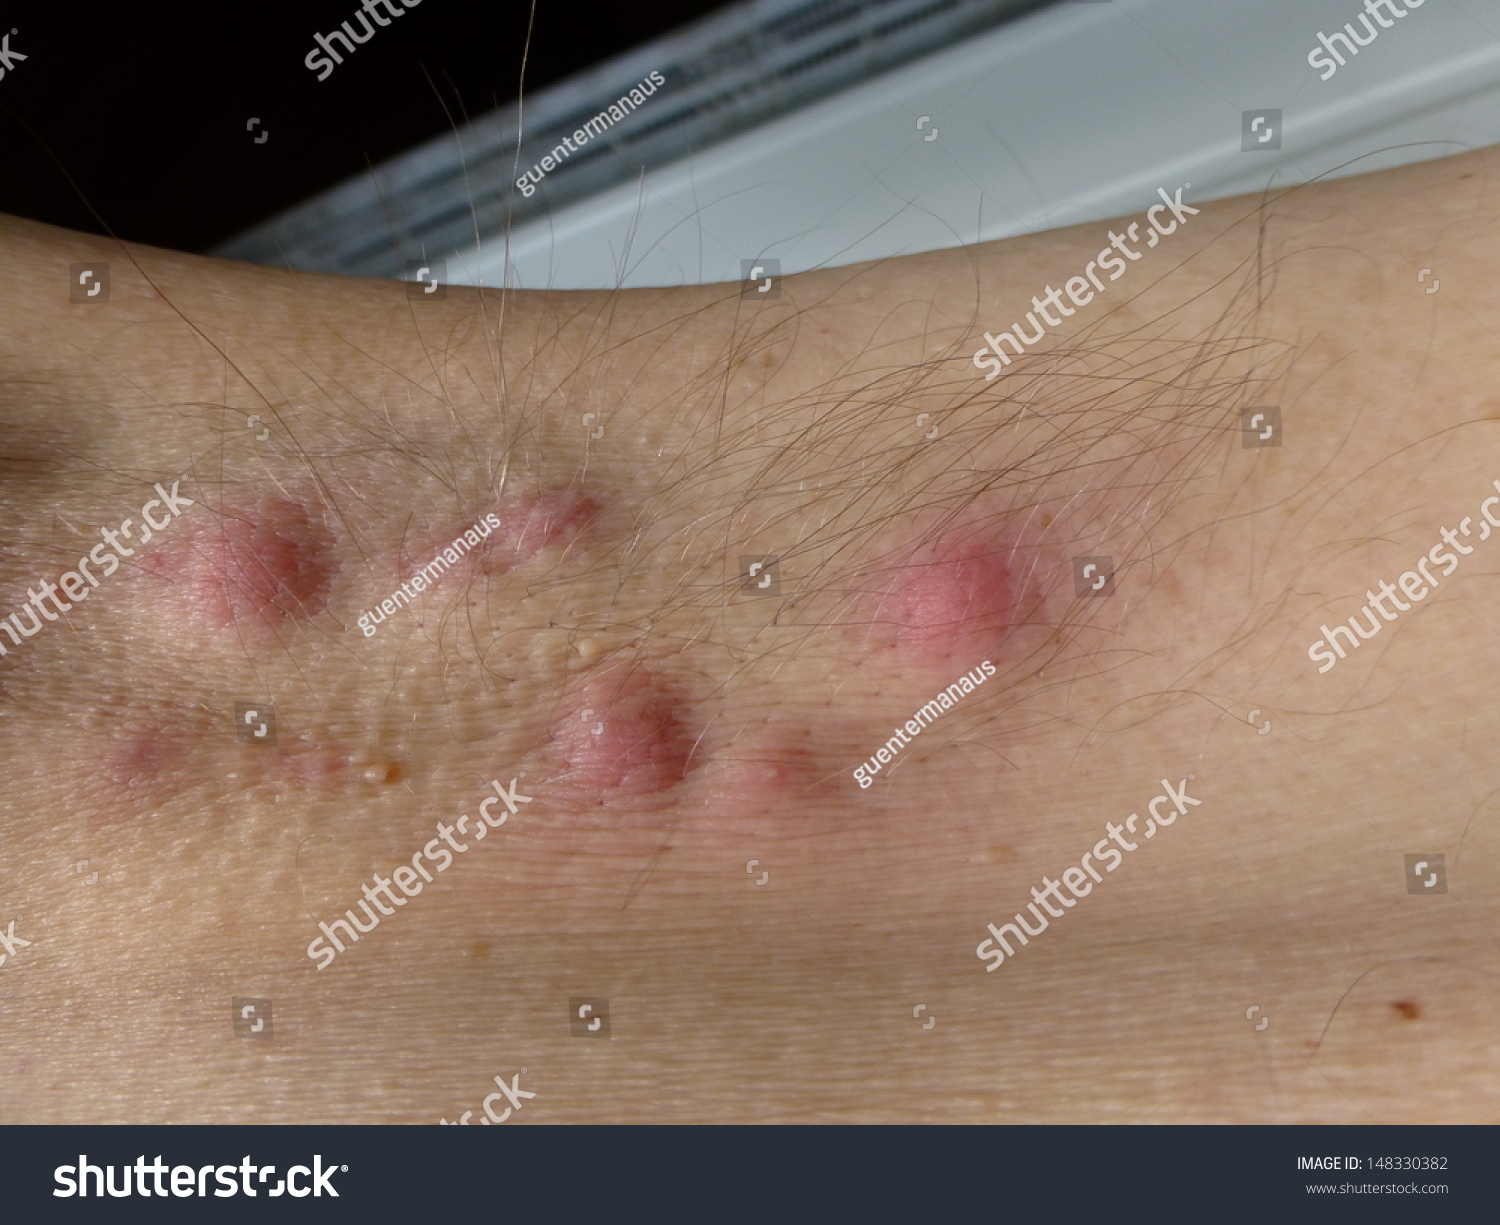 Acne inversa, hidradenitis suppurativa in the armpit, (inflammatory skin disease) #148330382